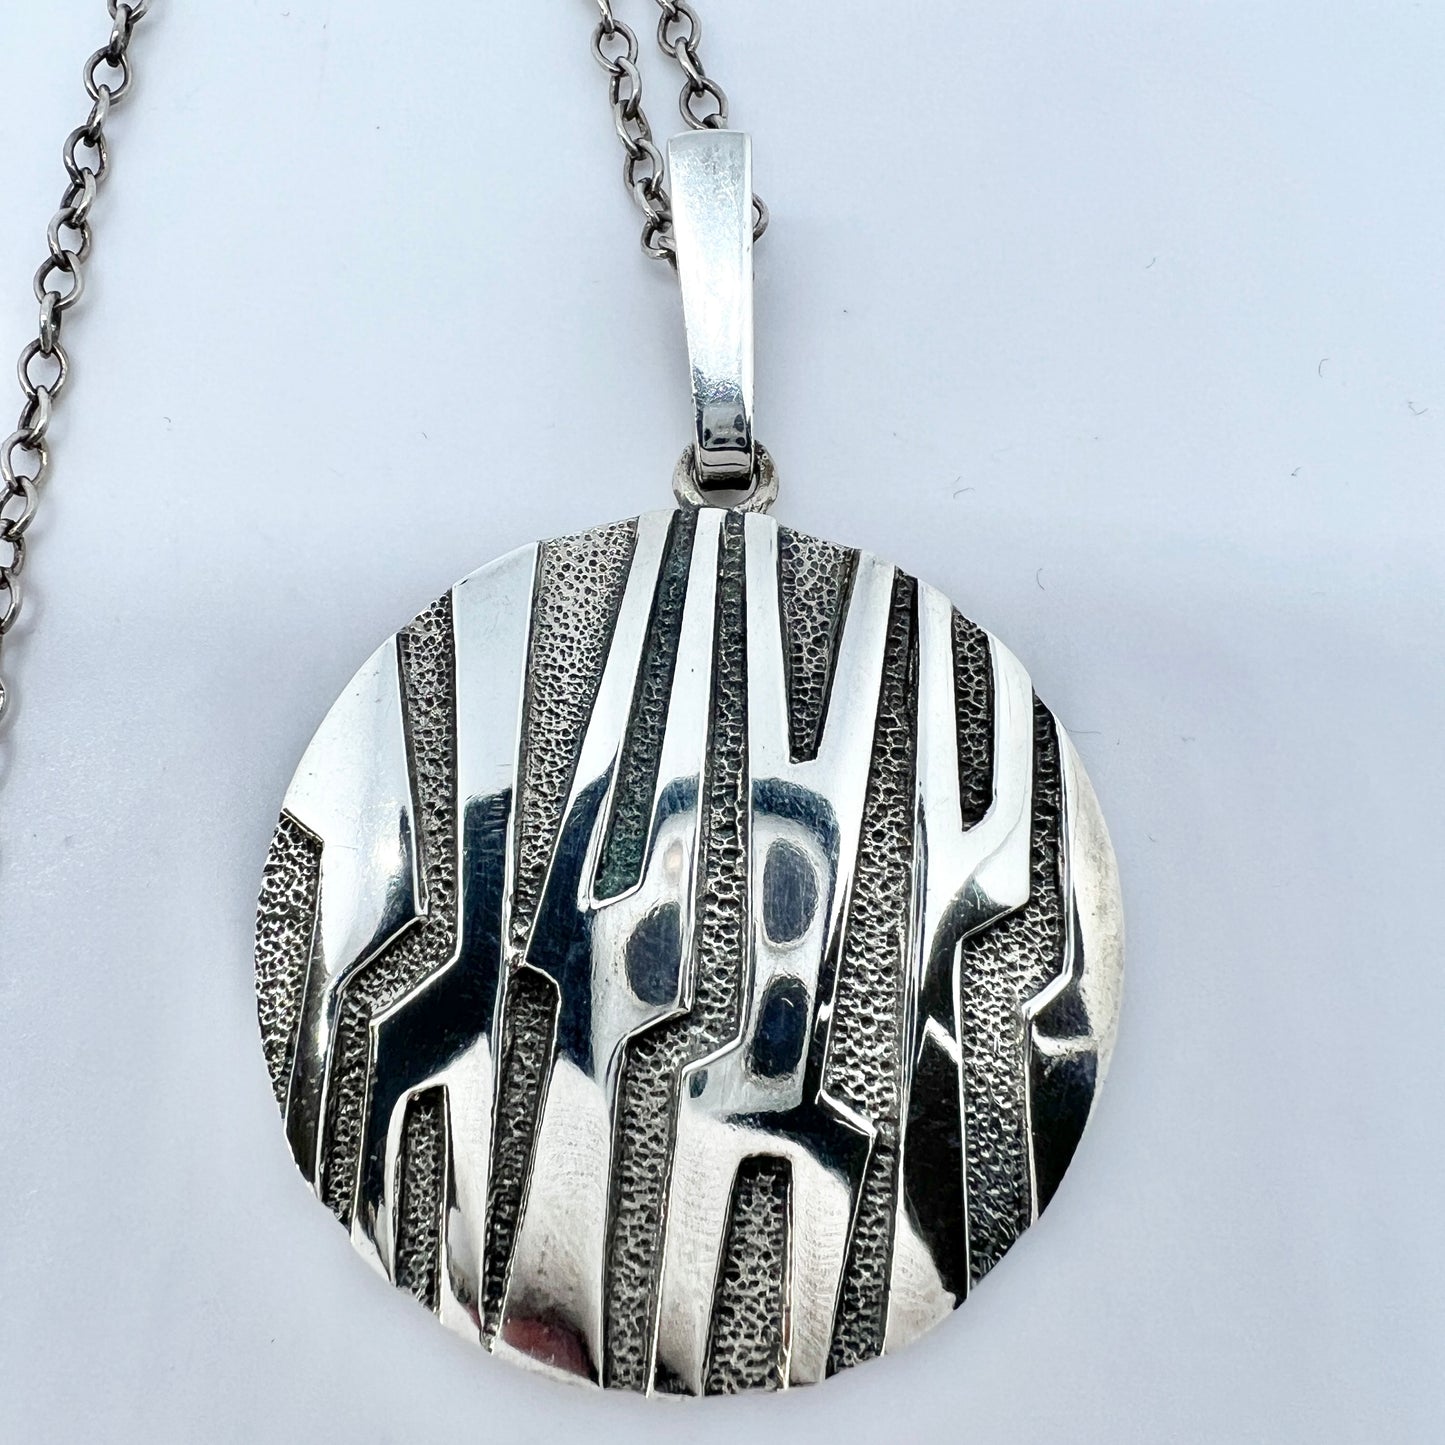 Vintage Modernist 1960-70s Solid Silver Pendant Necklace. Makers Mark